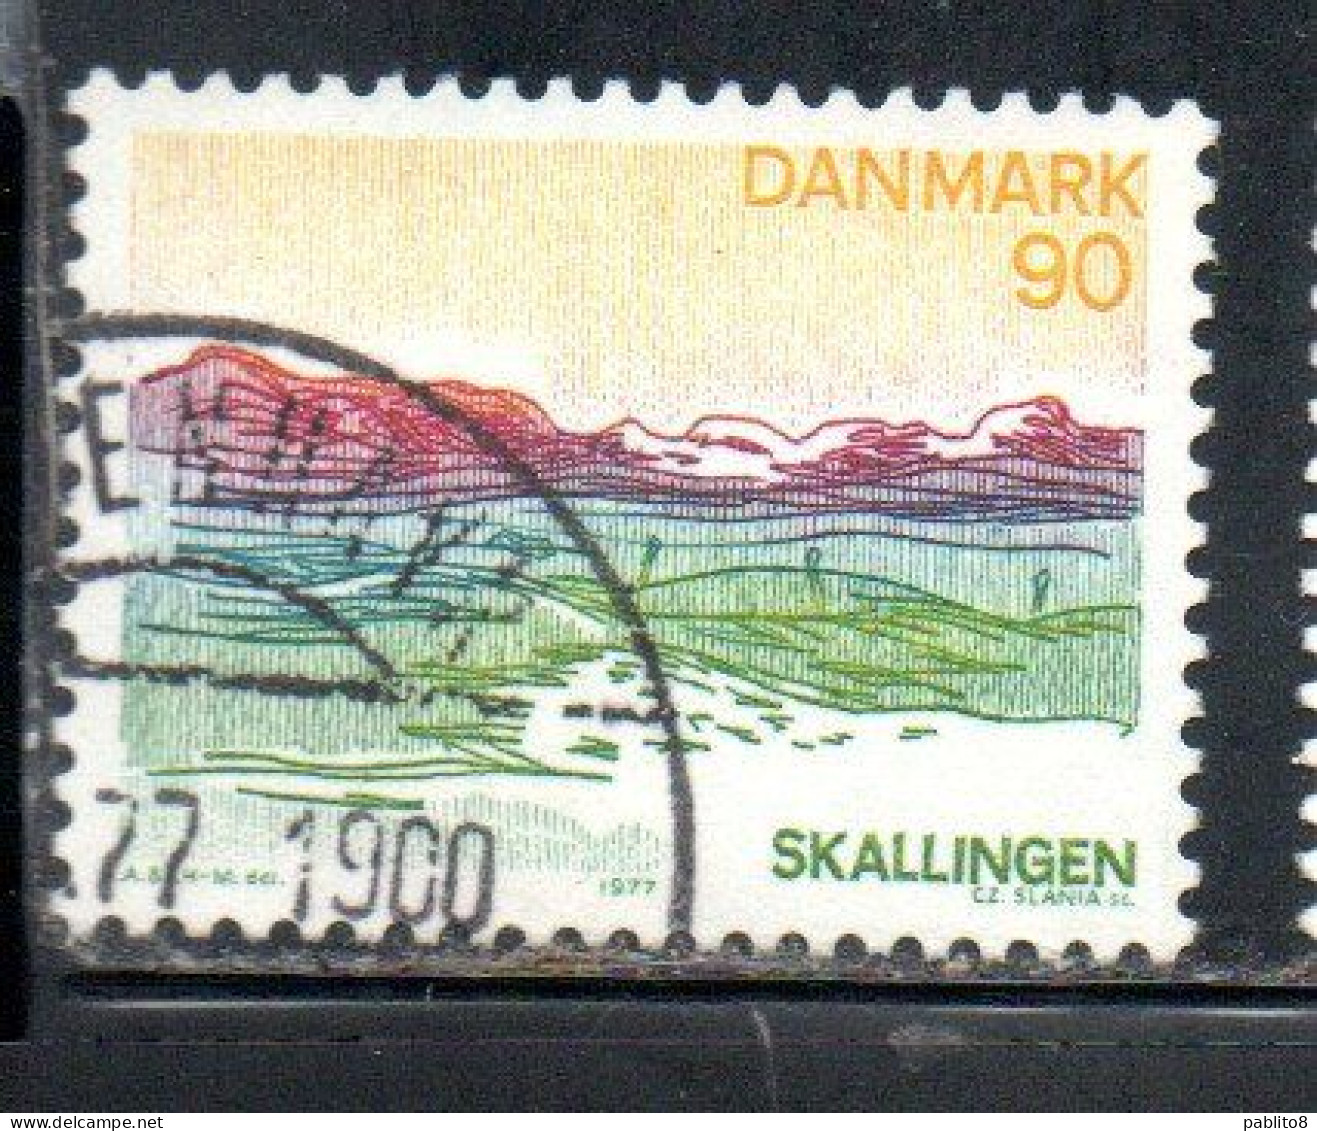 DANEMARK DANMARK DENMARK DANIMARCA 1977 LANDSCAPES SOUTHERN JUTLAND 90o USED USATO OBLITERE' - Gebraucht